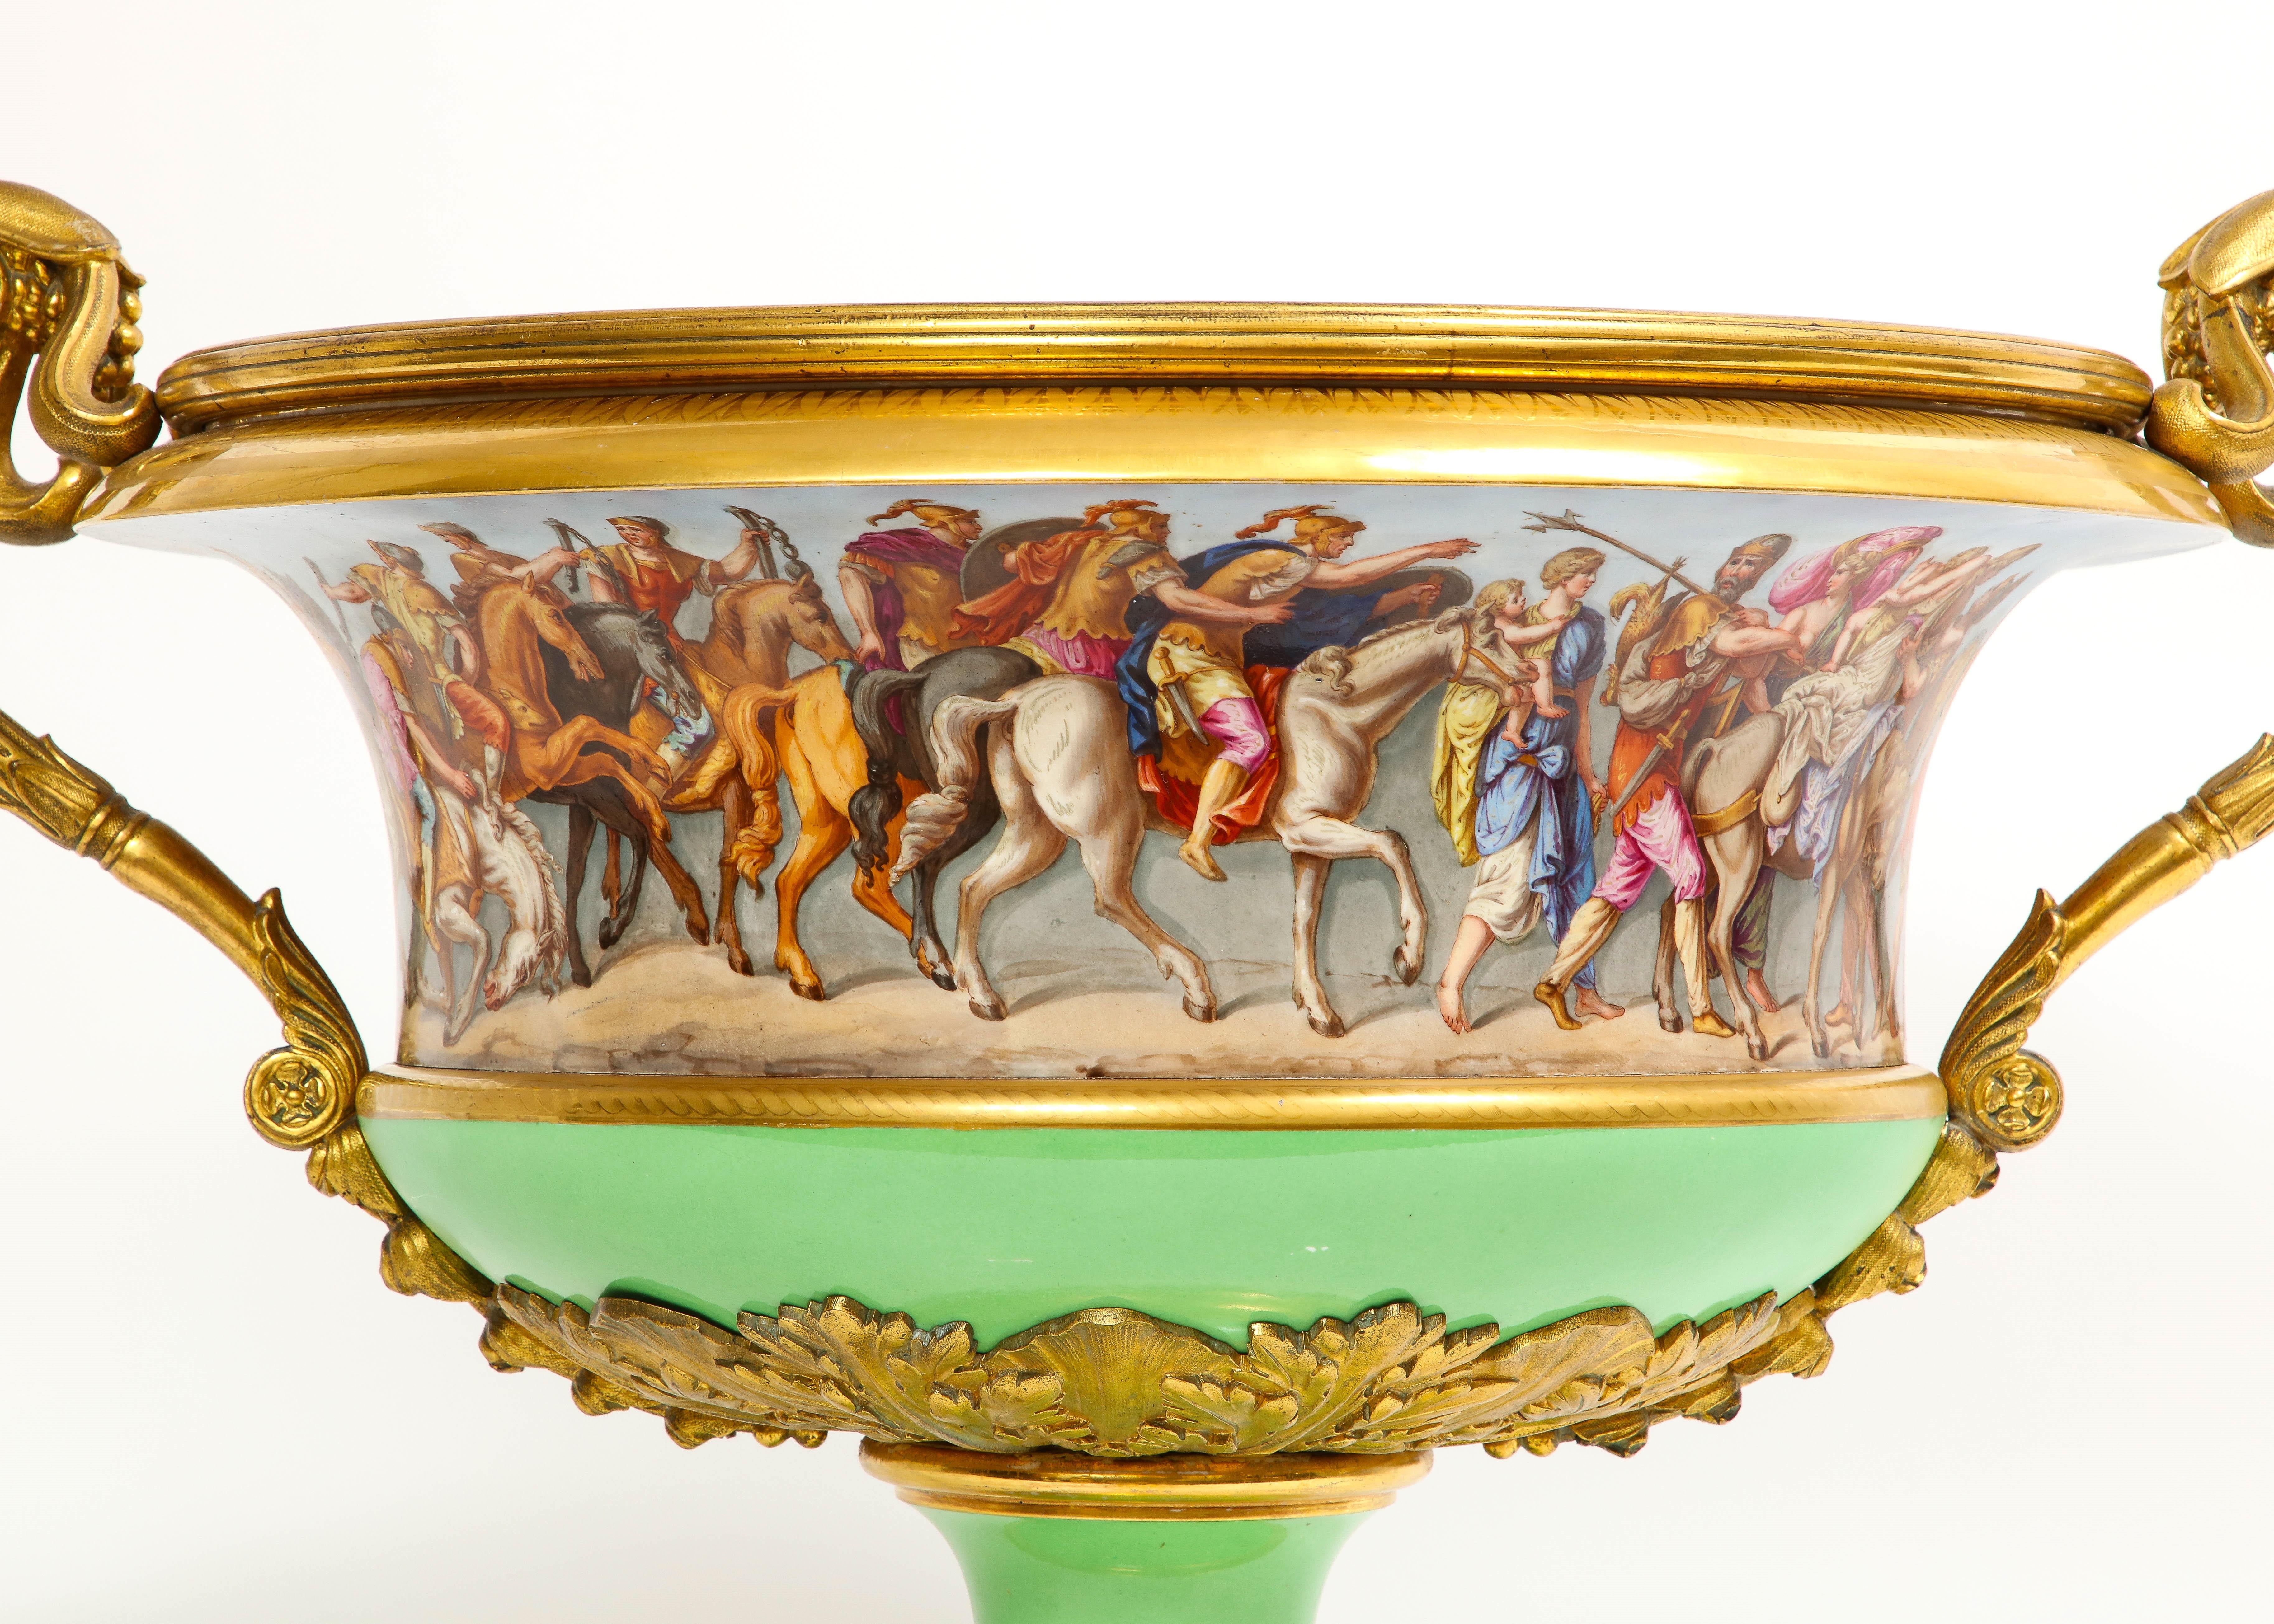 Monumental Sevres Porcelain Ormolu-Mounted 2-Handle Campana Form Centerpiece For Sale 6